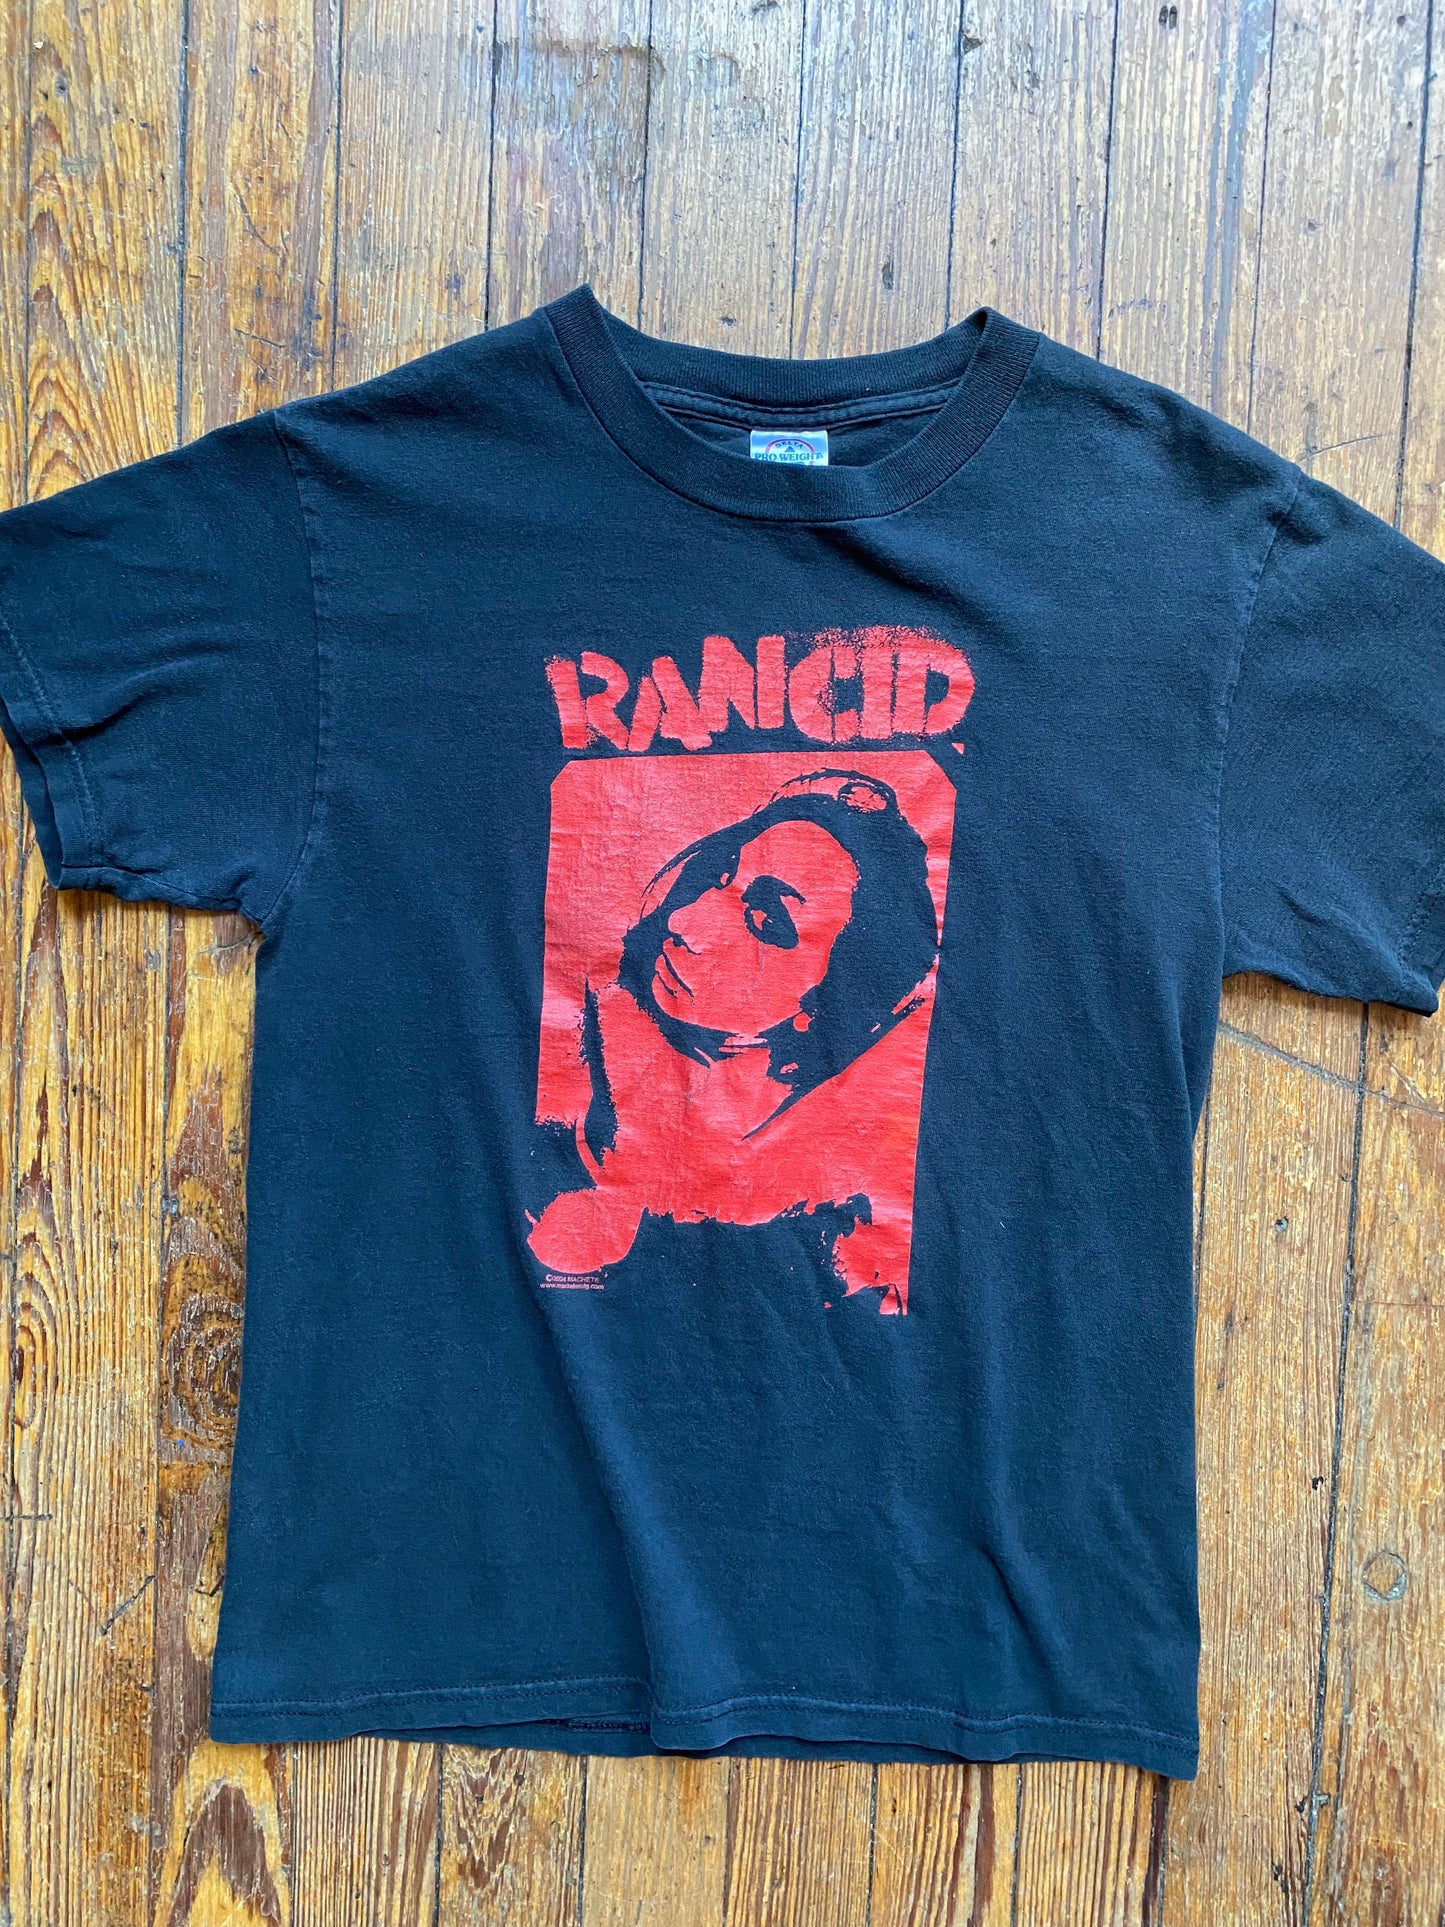 Rancid 2004 T-Shirt